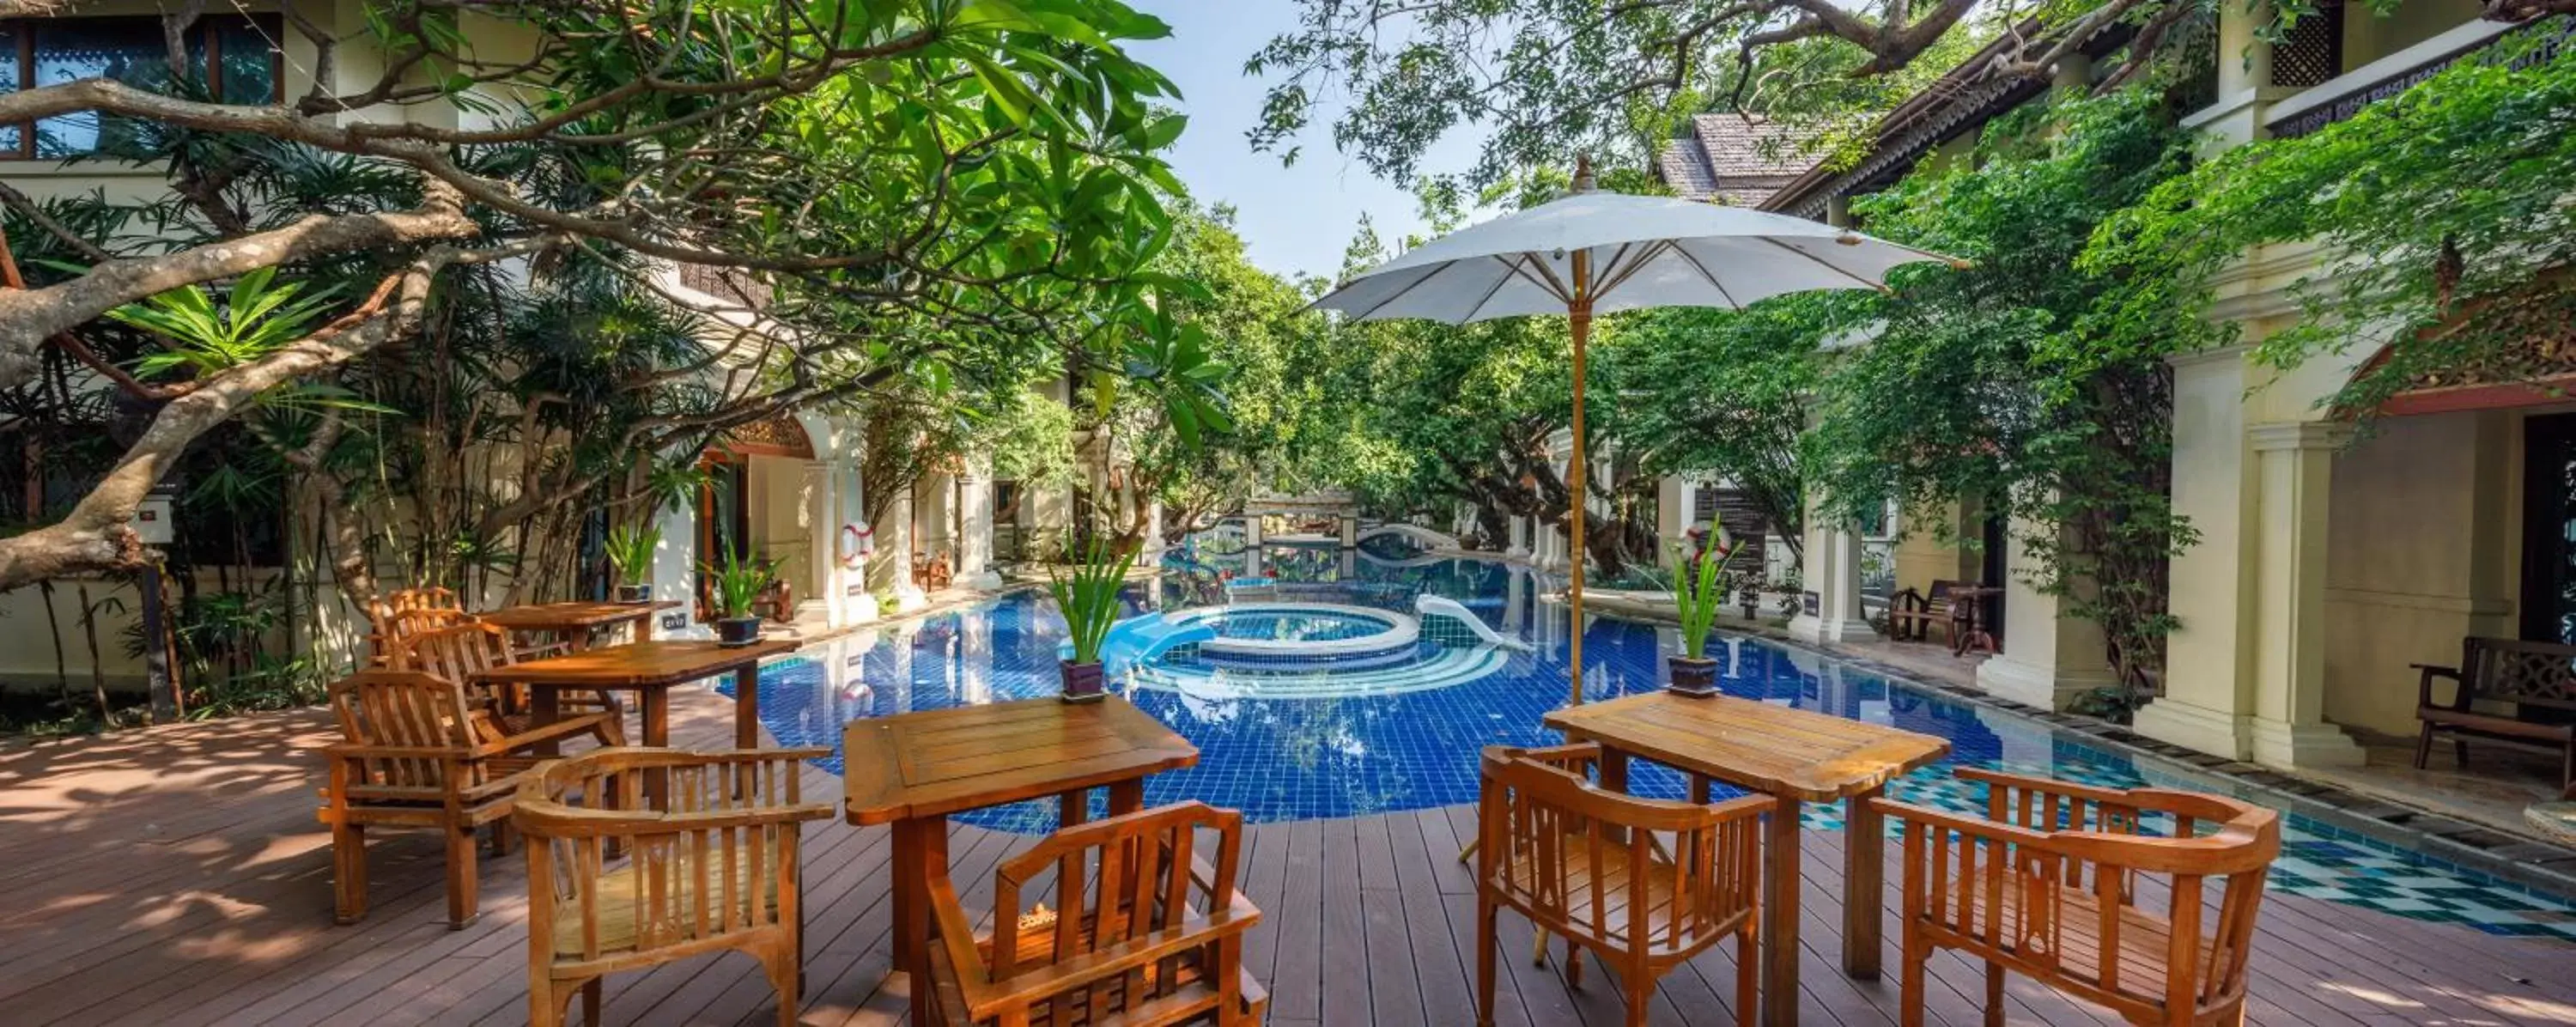 Swimming pool, Restaurant/Places to Eat in Centara Khum Phaya Resort & Spa, Centara Boutique Collection